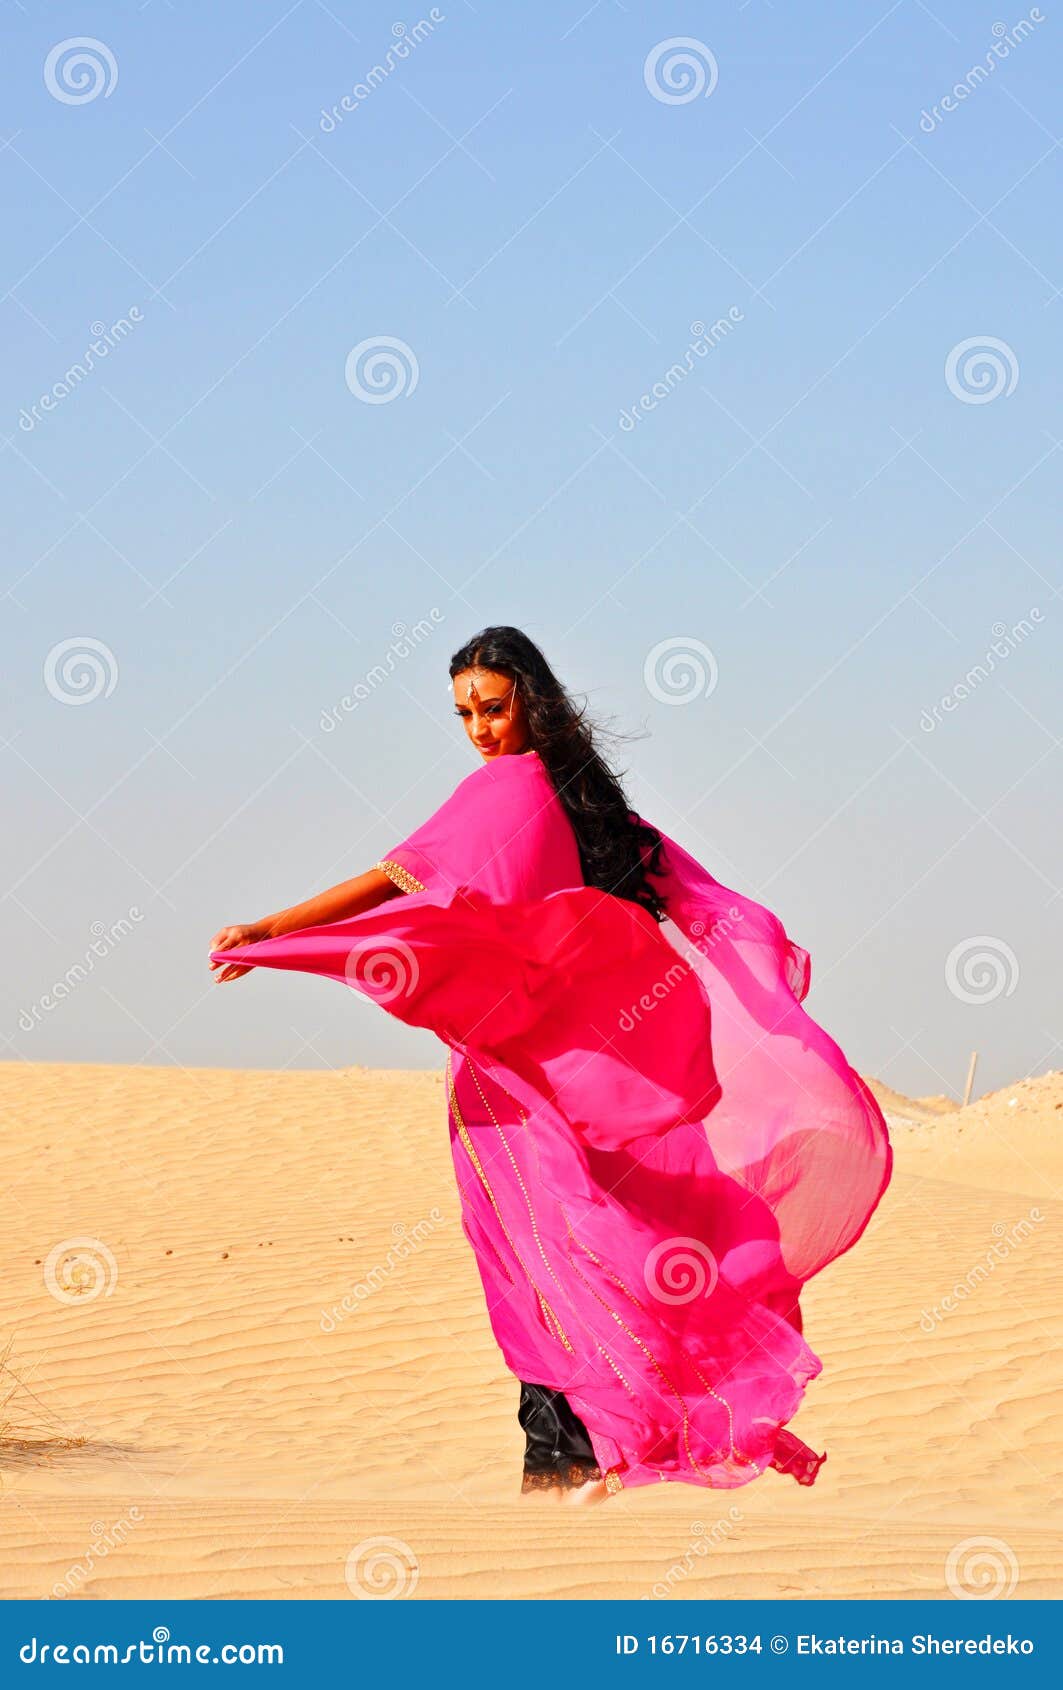 Dubai Gulf mantello mishlah Sheikh Royalty vestito arabo omani Desert dress 